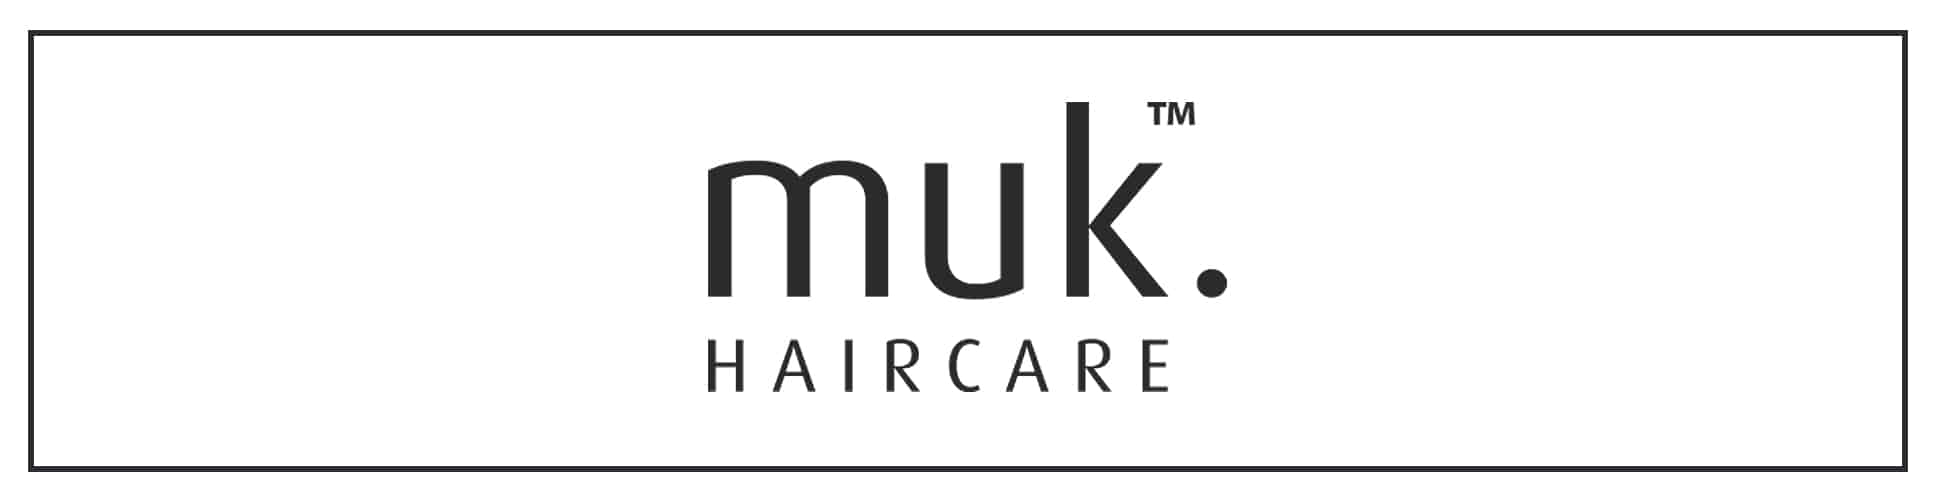 The logo for muk haircare.